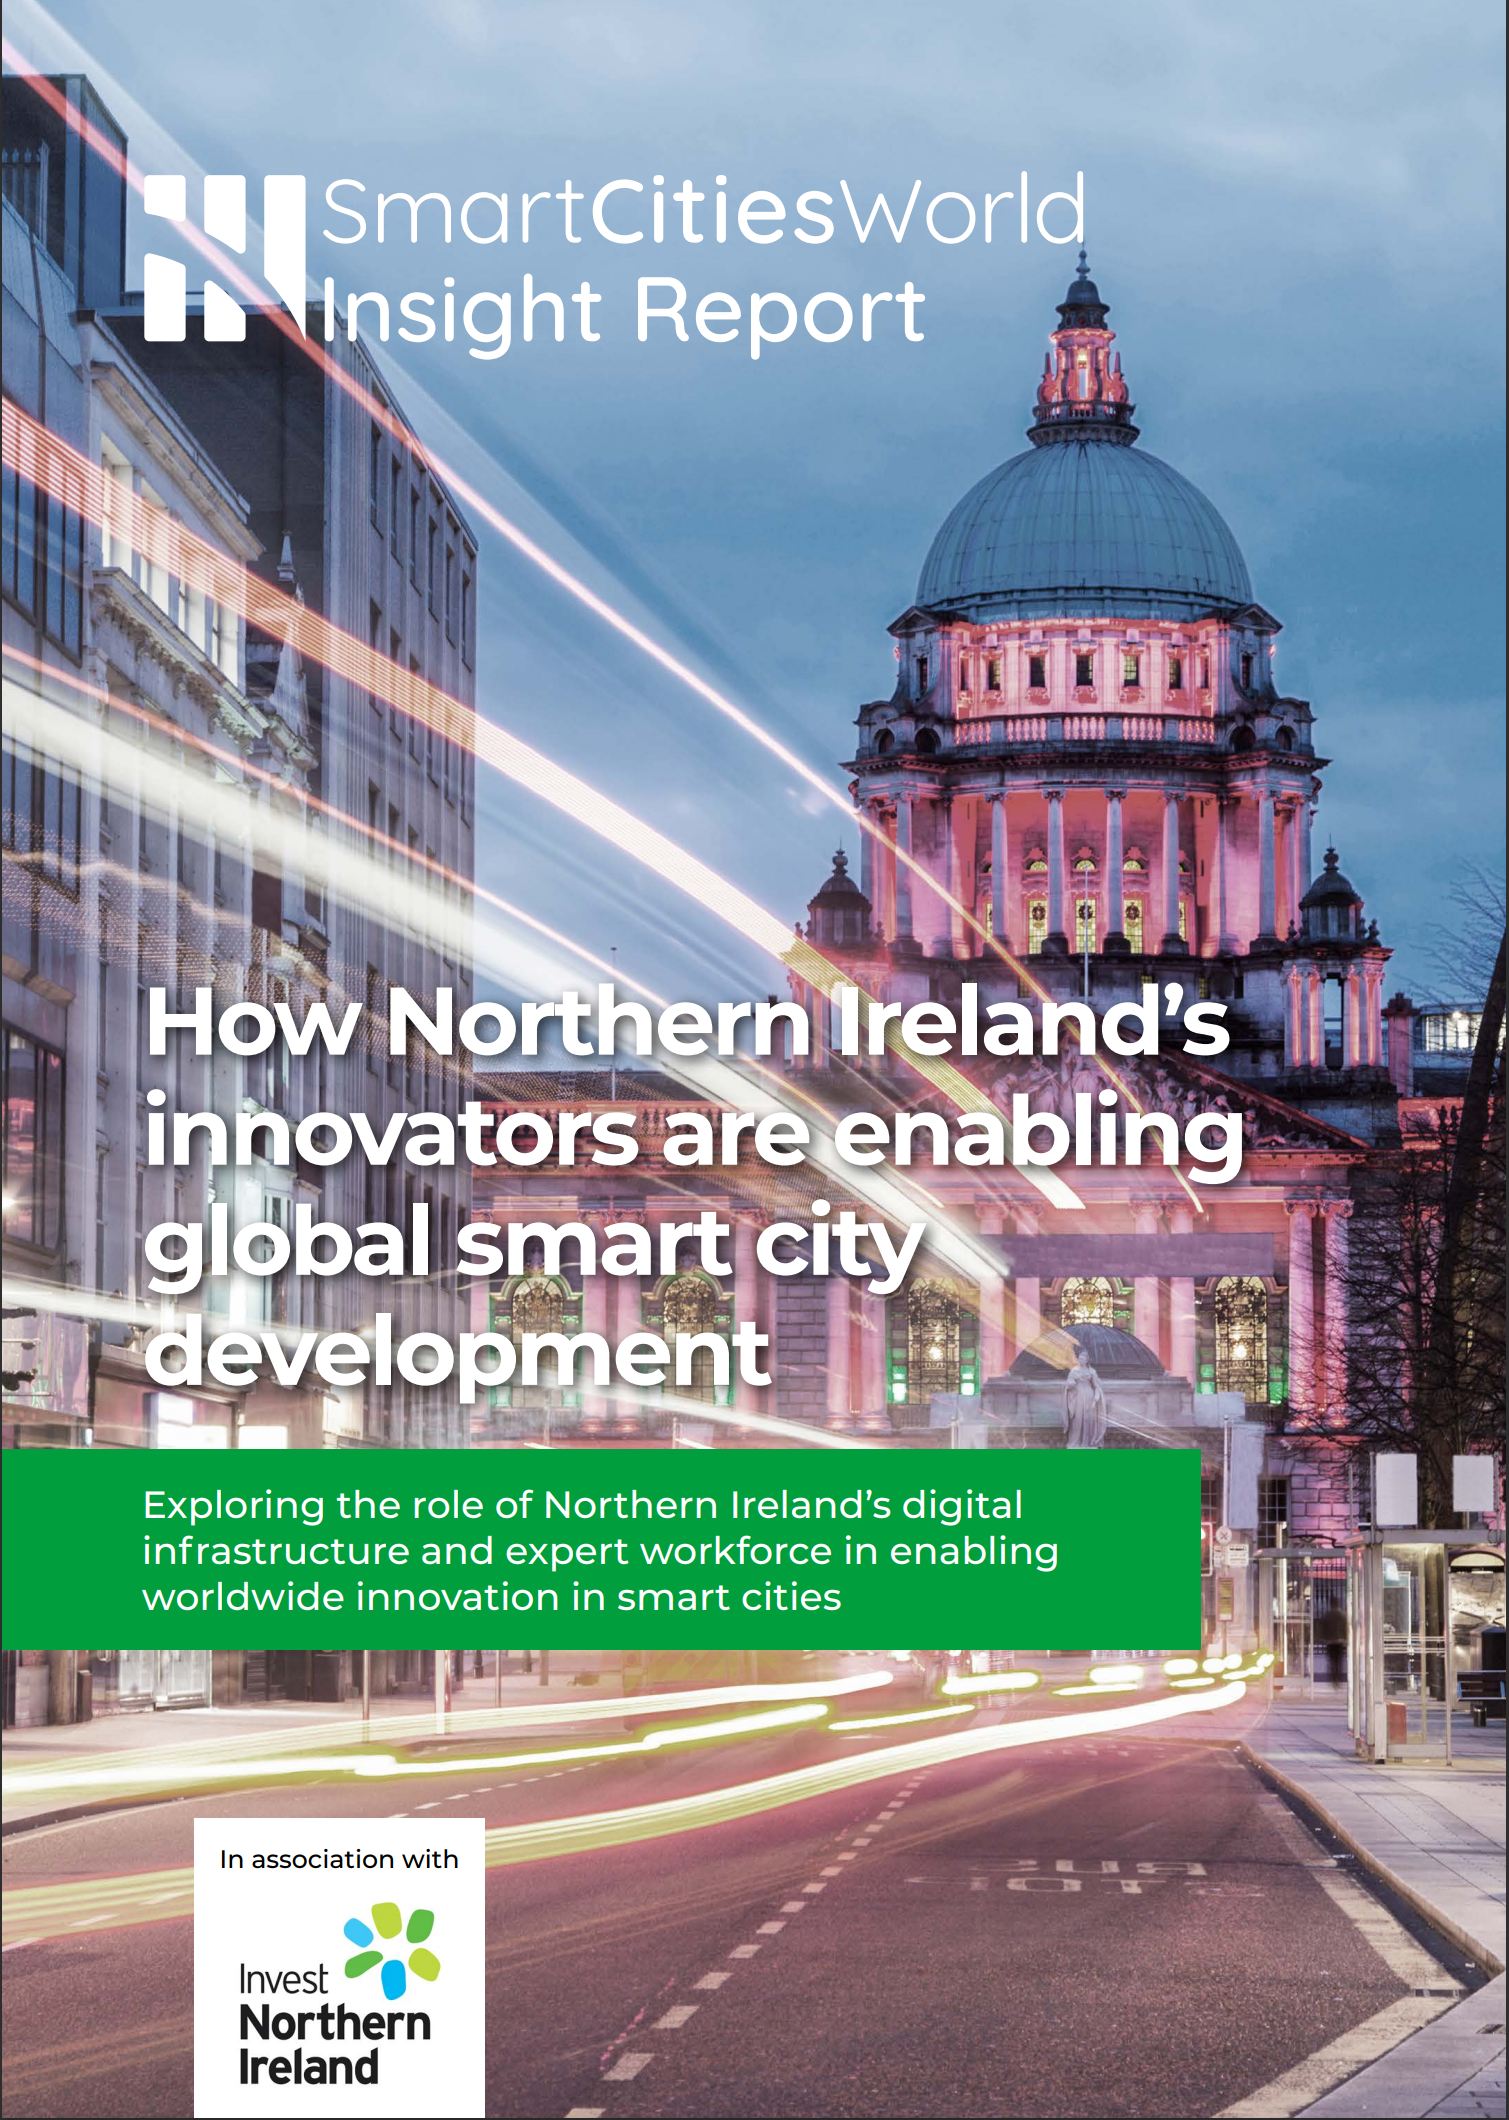 Insight Report: How Northern Ireland’s innovators are enabling global smart city development